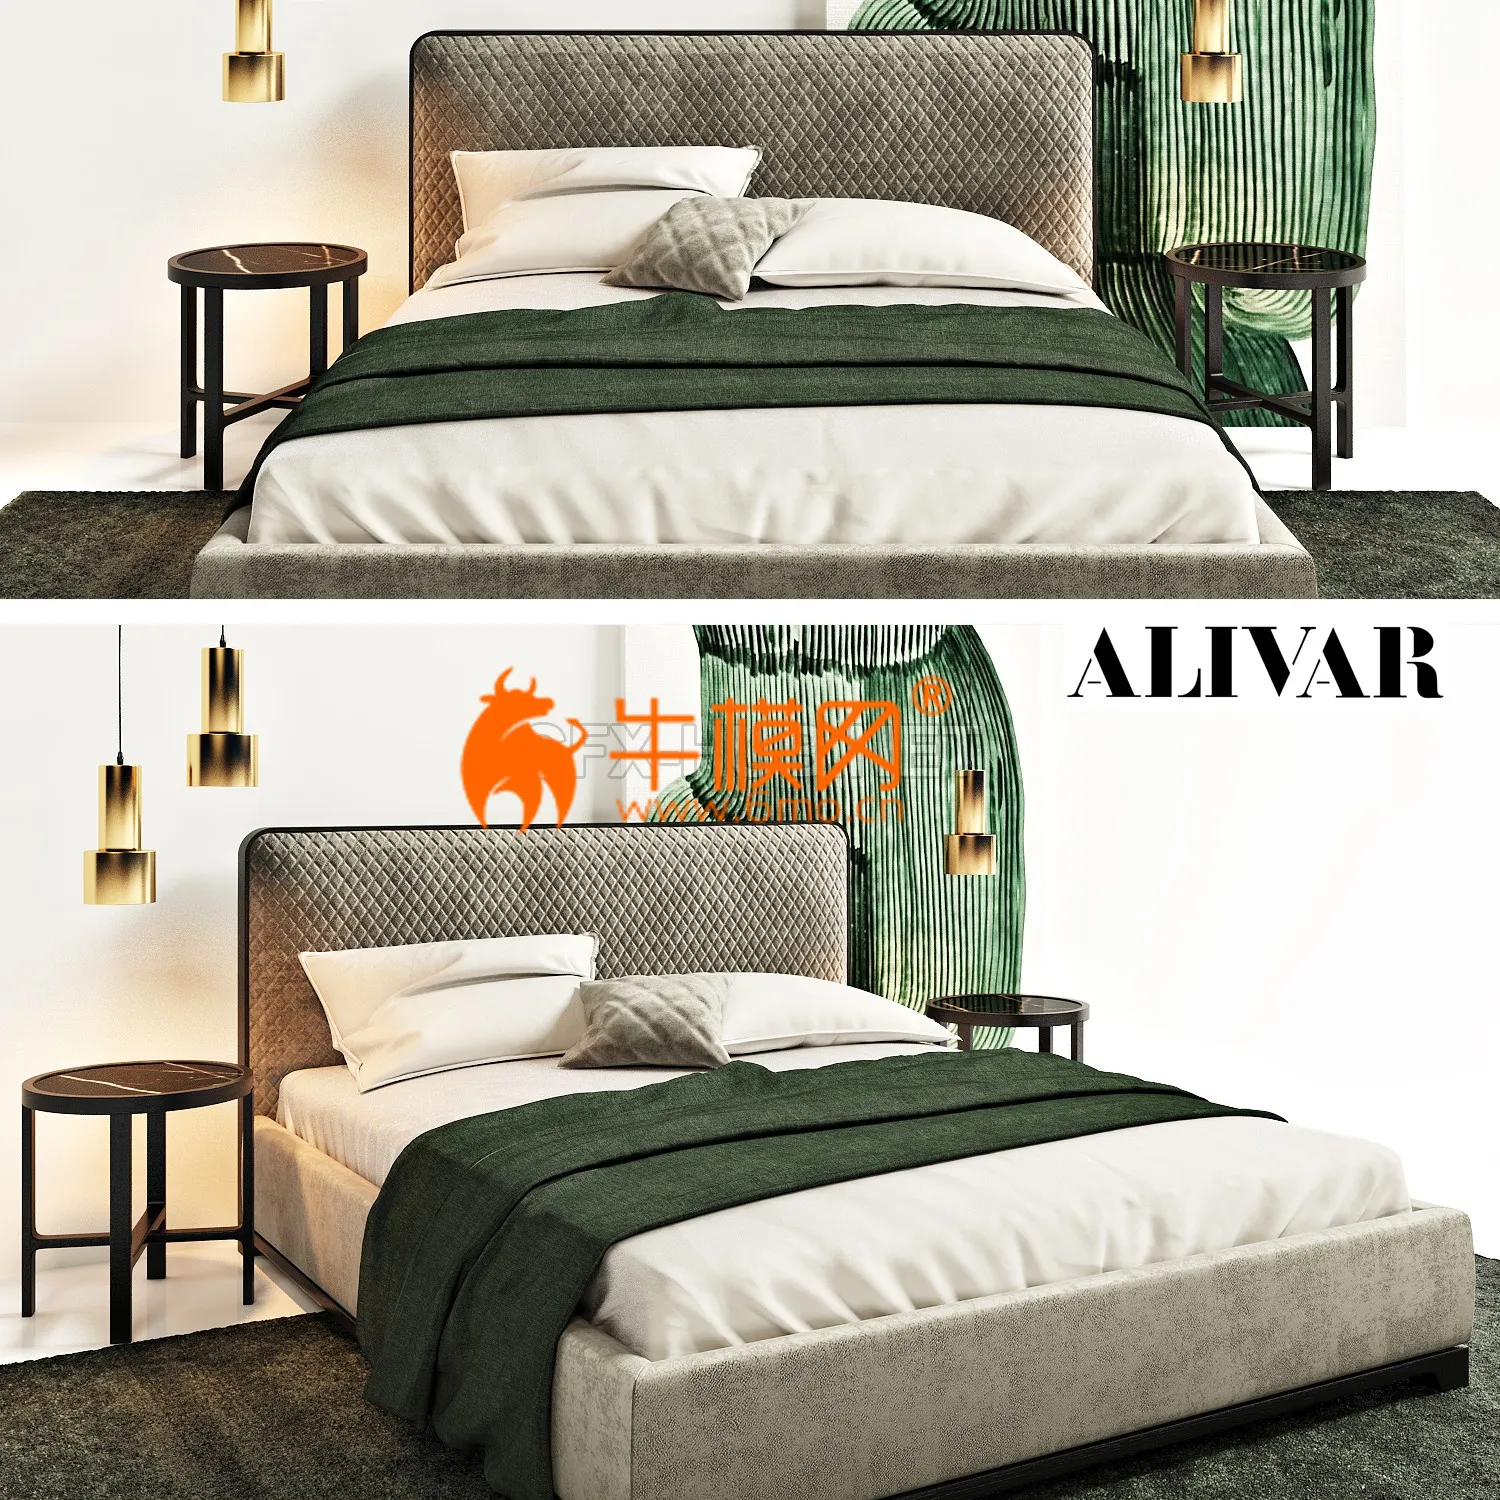 BALI bed by ALIVAR – 3611